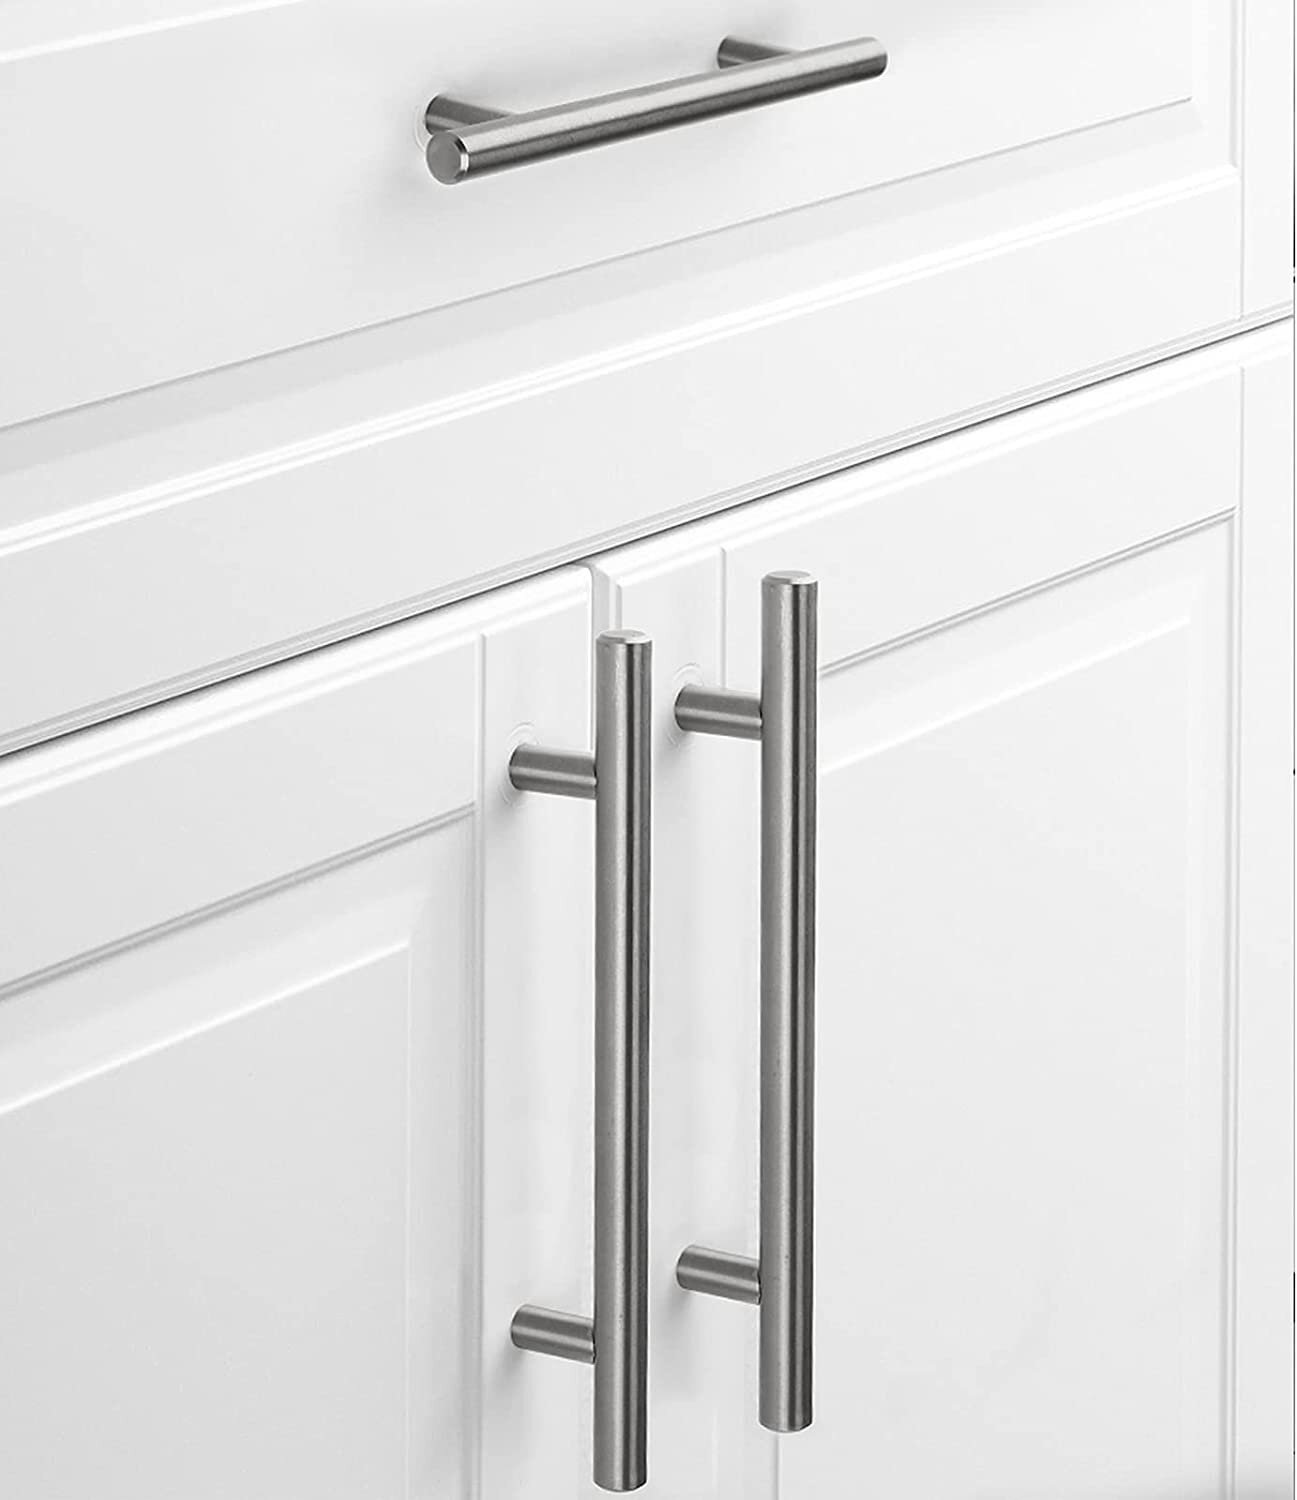 5 Pack Cabinet Pulls Cabinet Handles 5 ” Hole Center,Kitchen Cabinet Hardware Kitchen Handles for Cabinets Cupboard Handles Drawer Handles